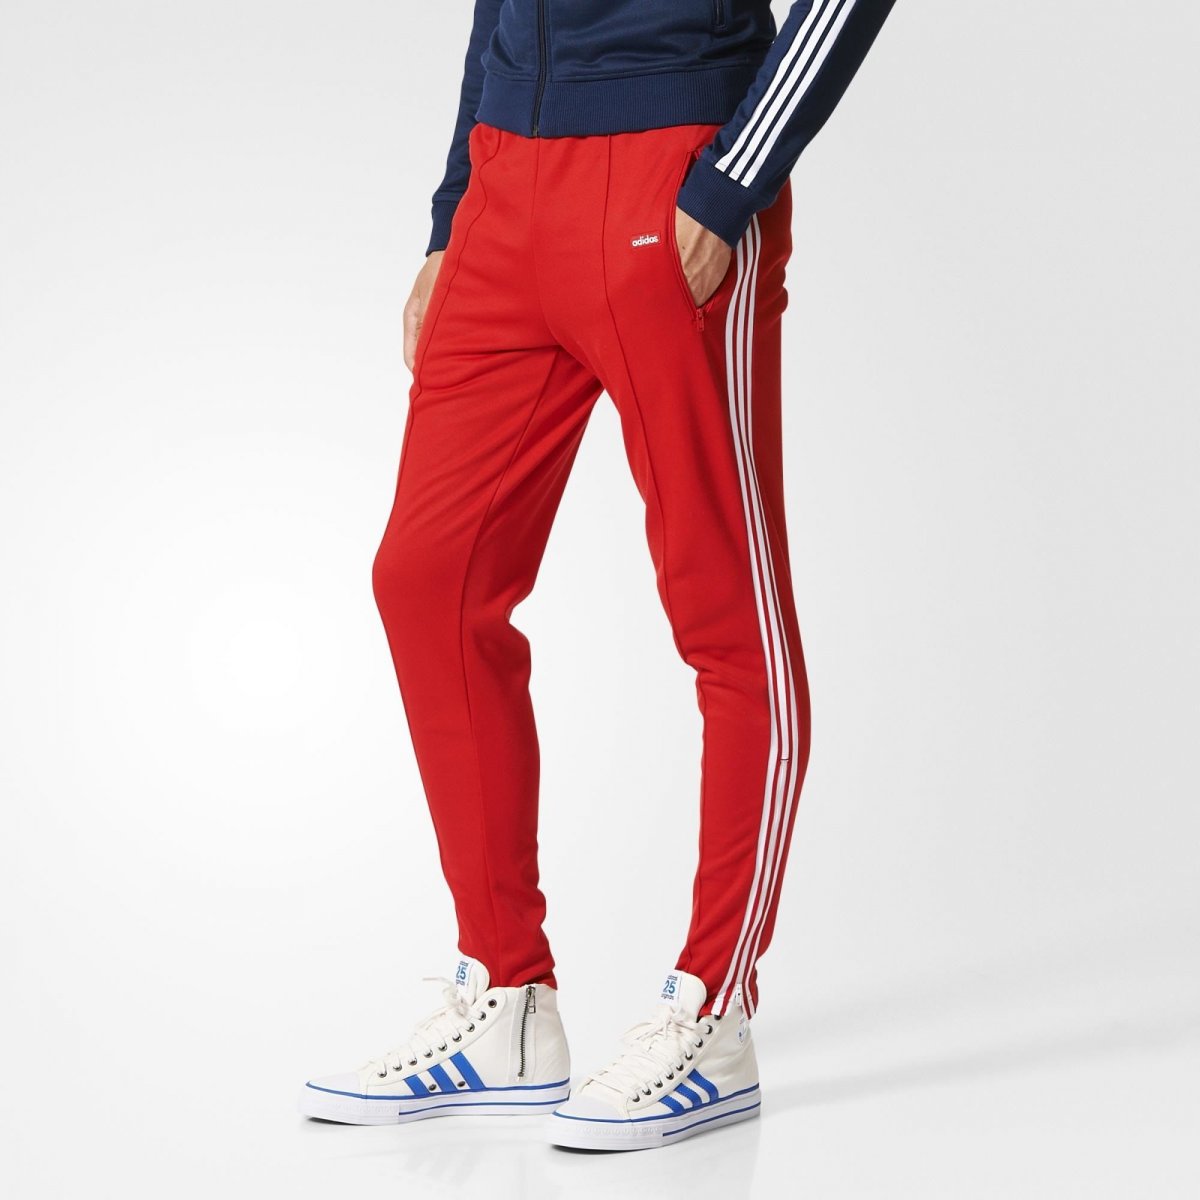 Adidas Originals 3 Stripes штаны